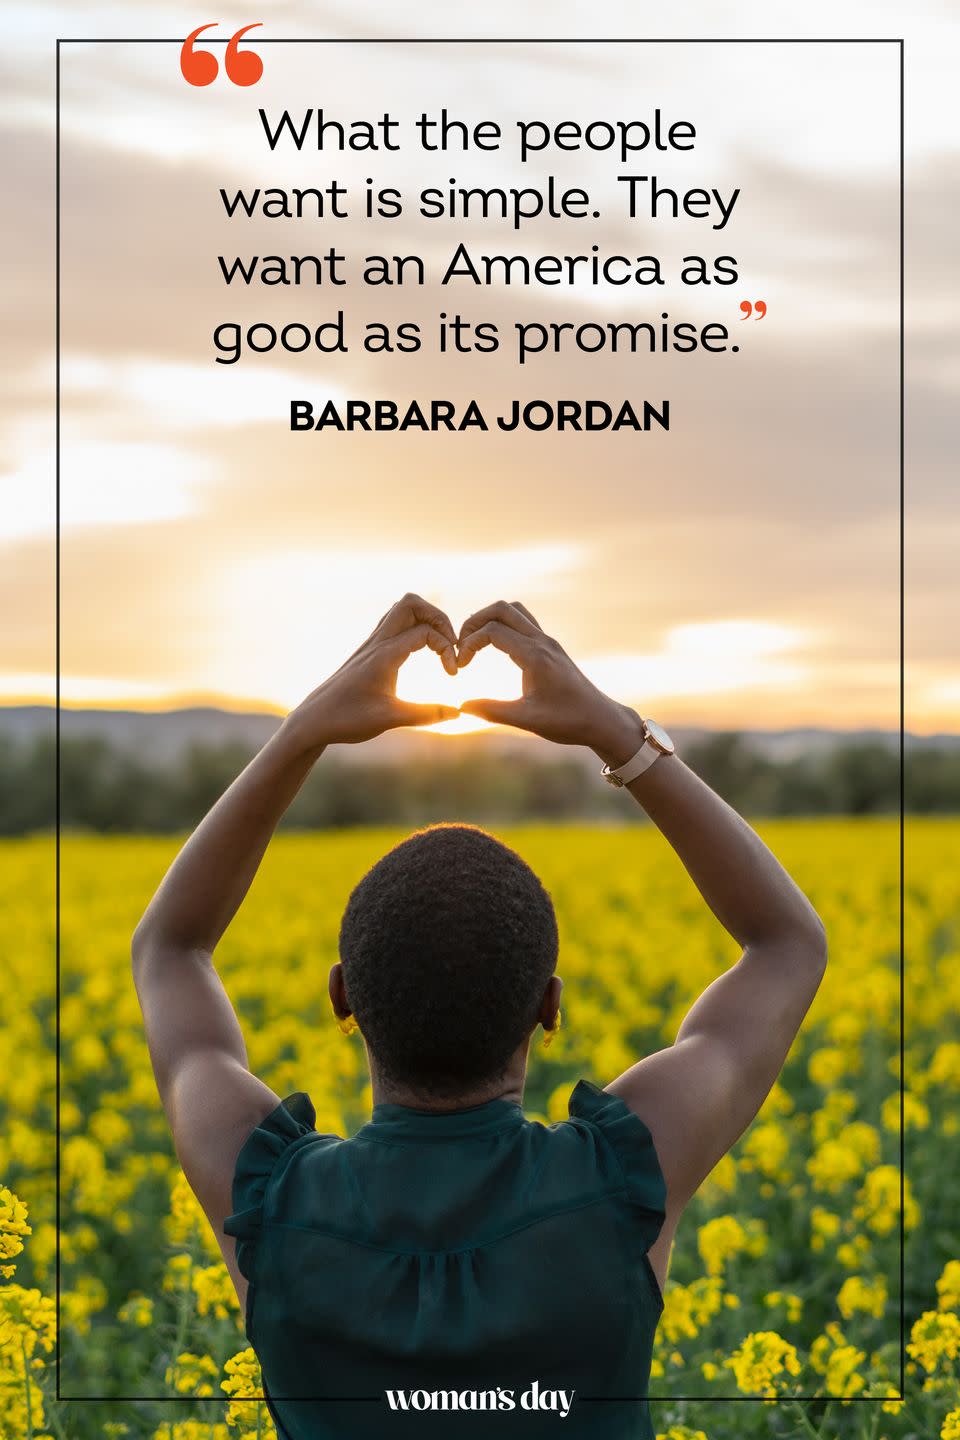 79) Barbara Jordan